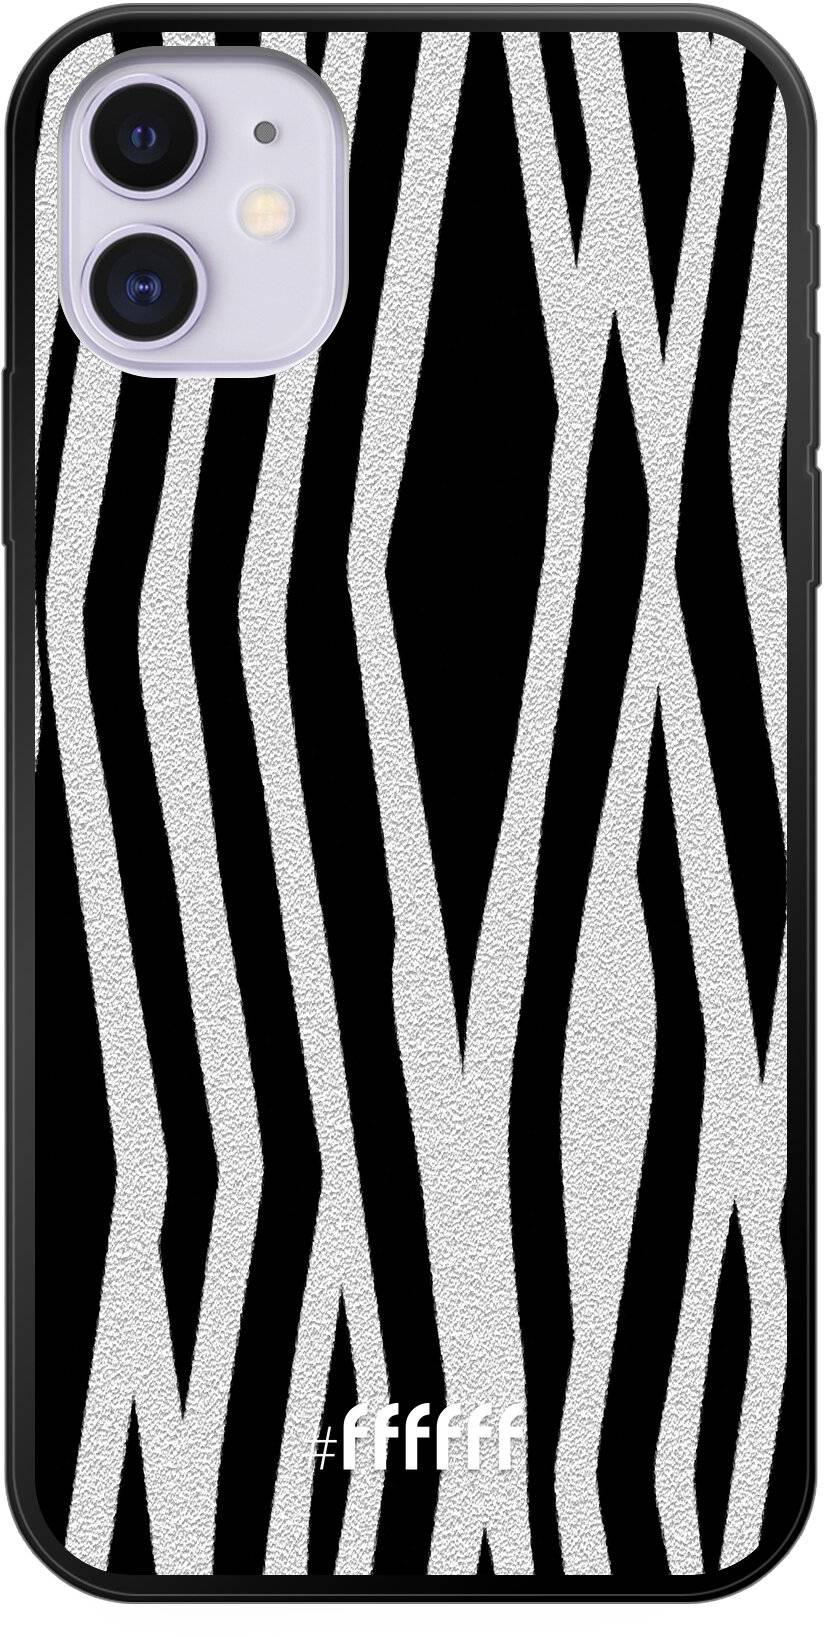 Zebra Print iPhone 11